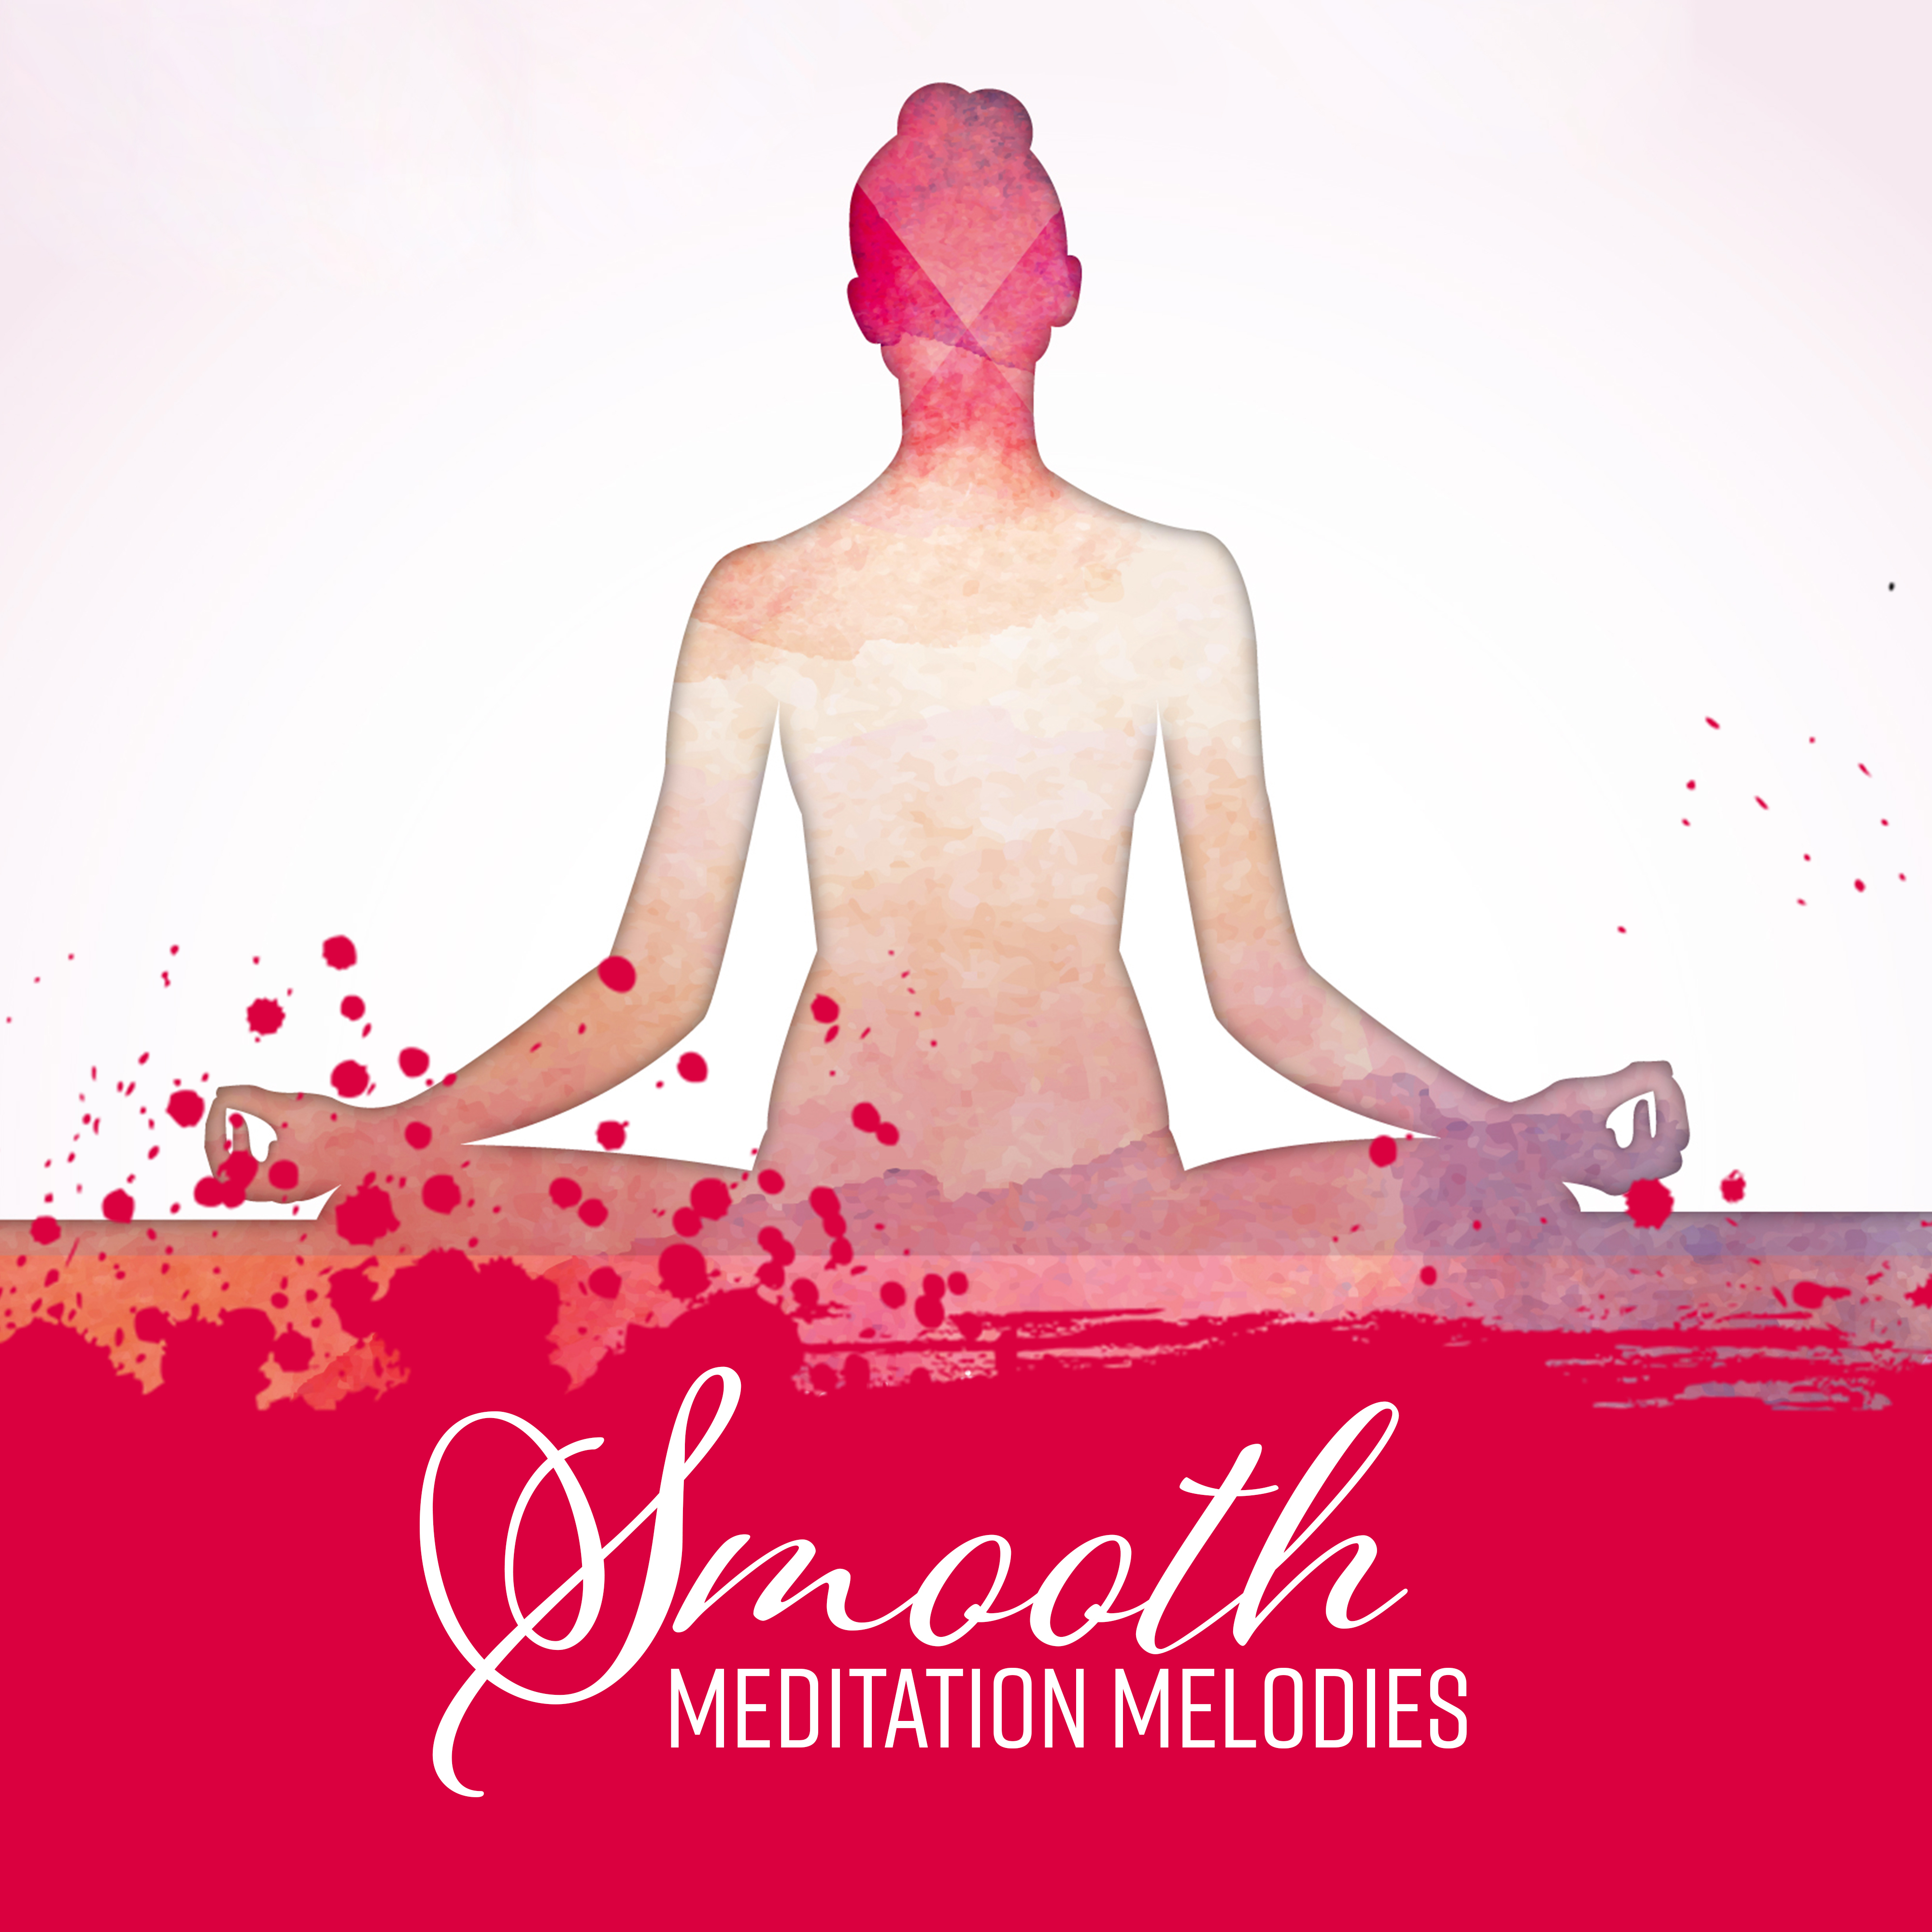 Smooth Meditation Melodies